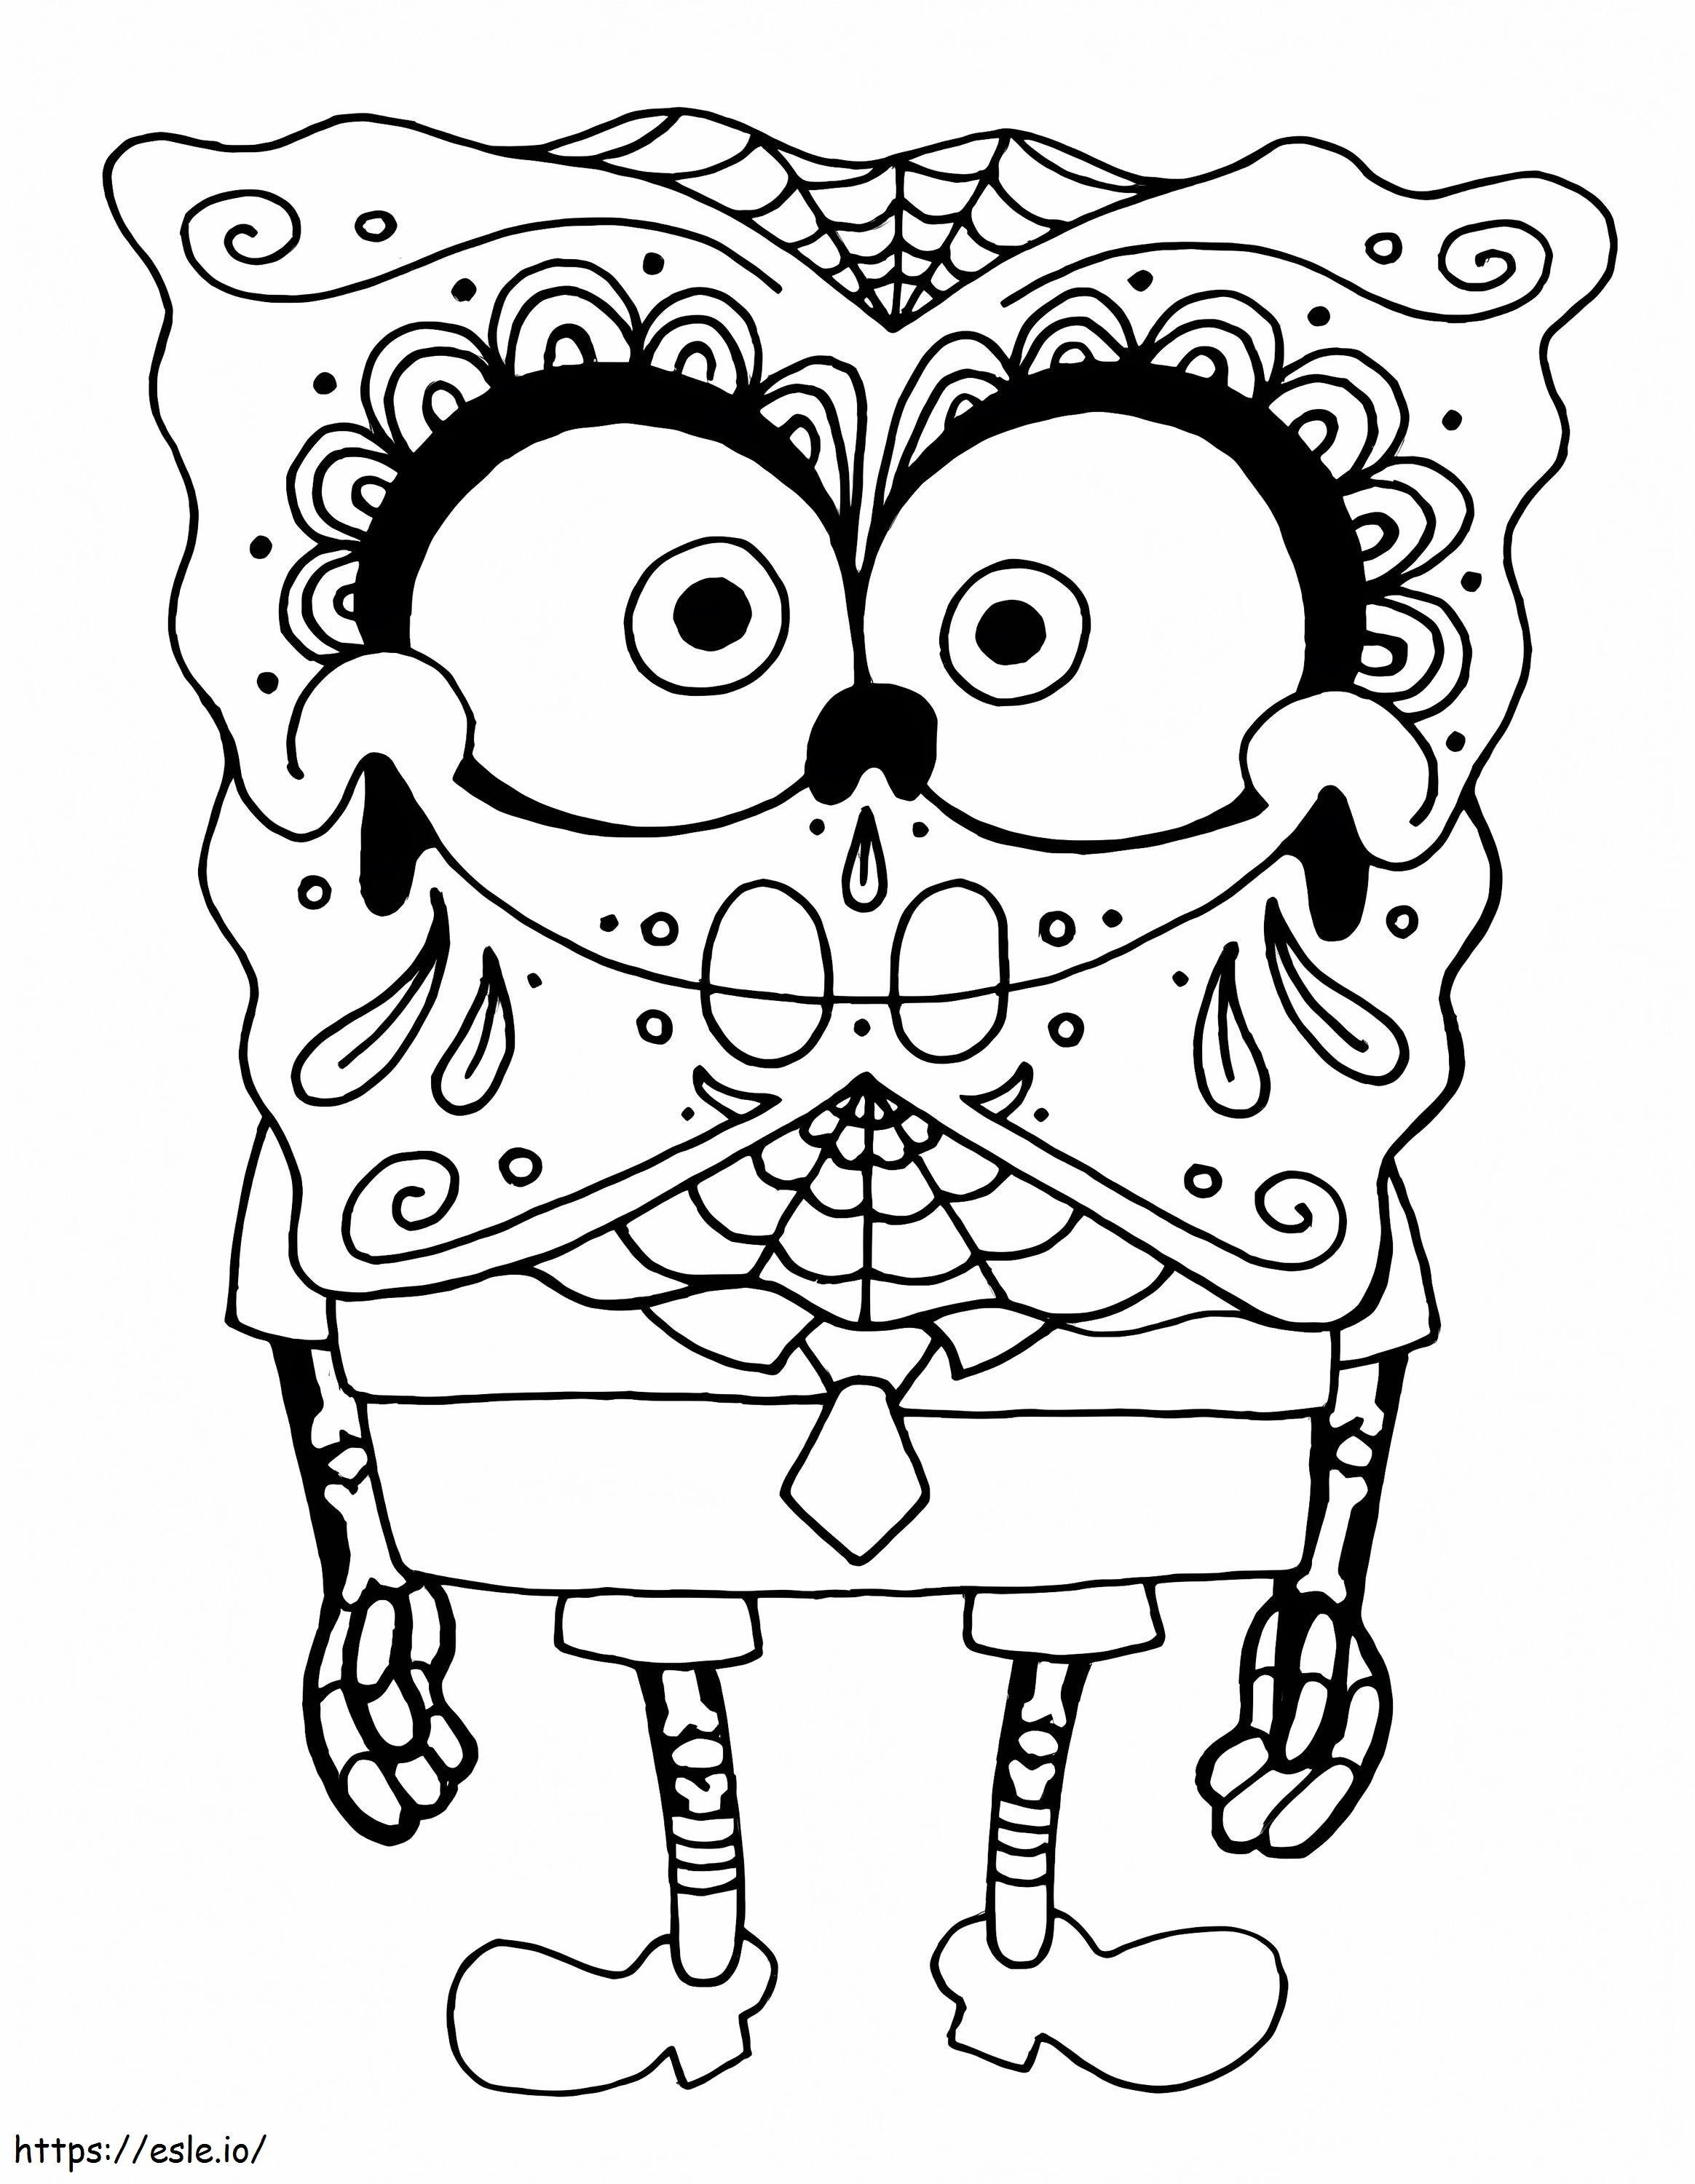 Spongebob Skull coloring page